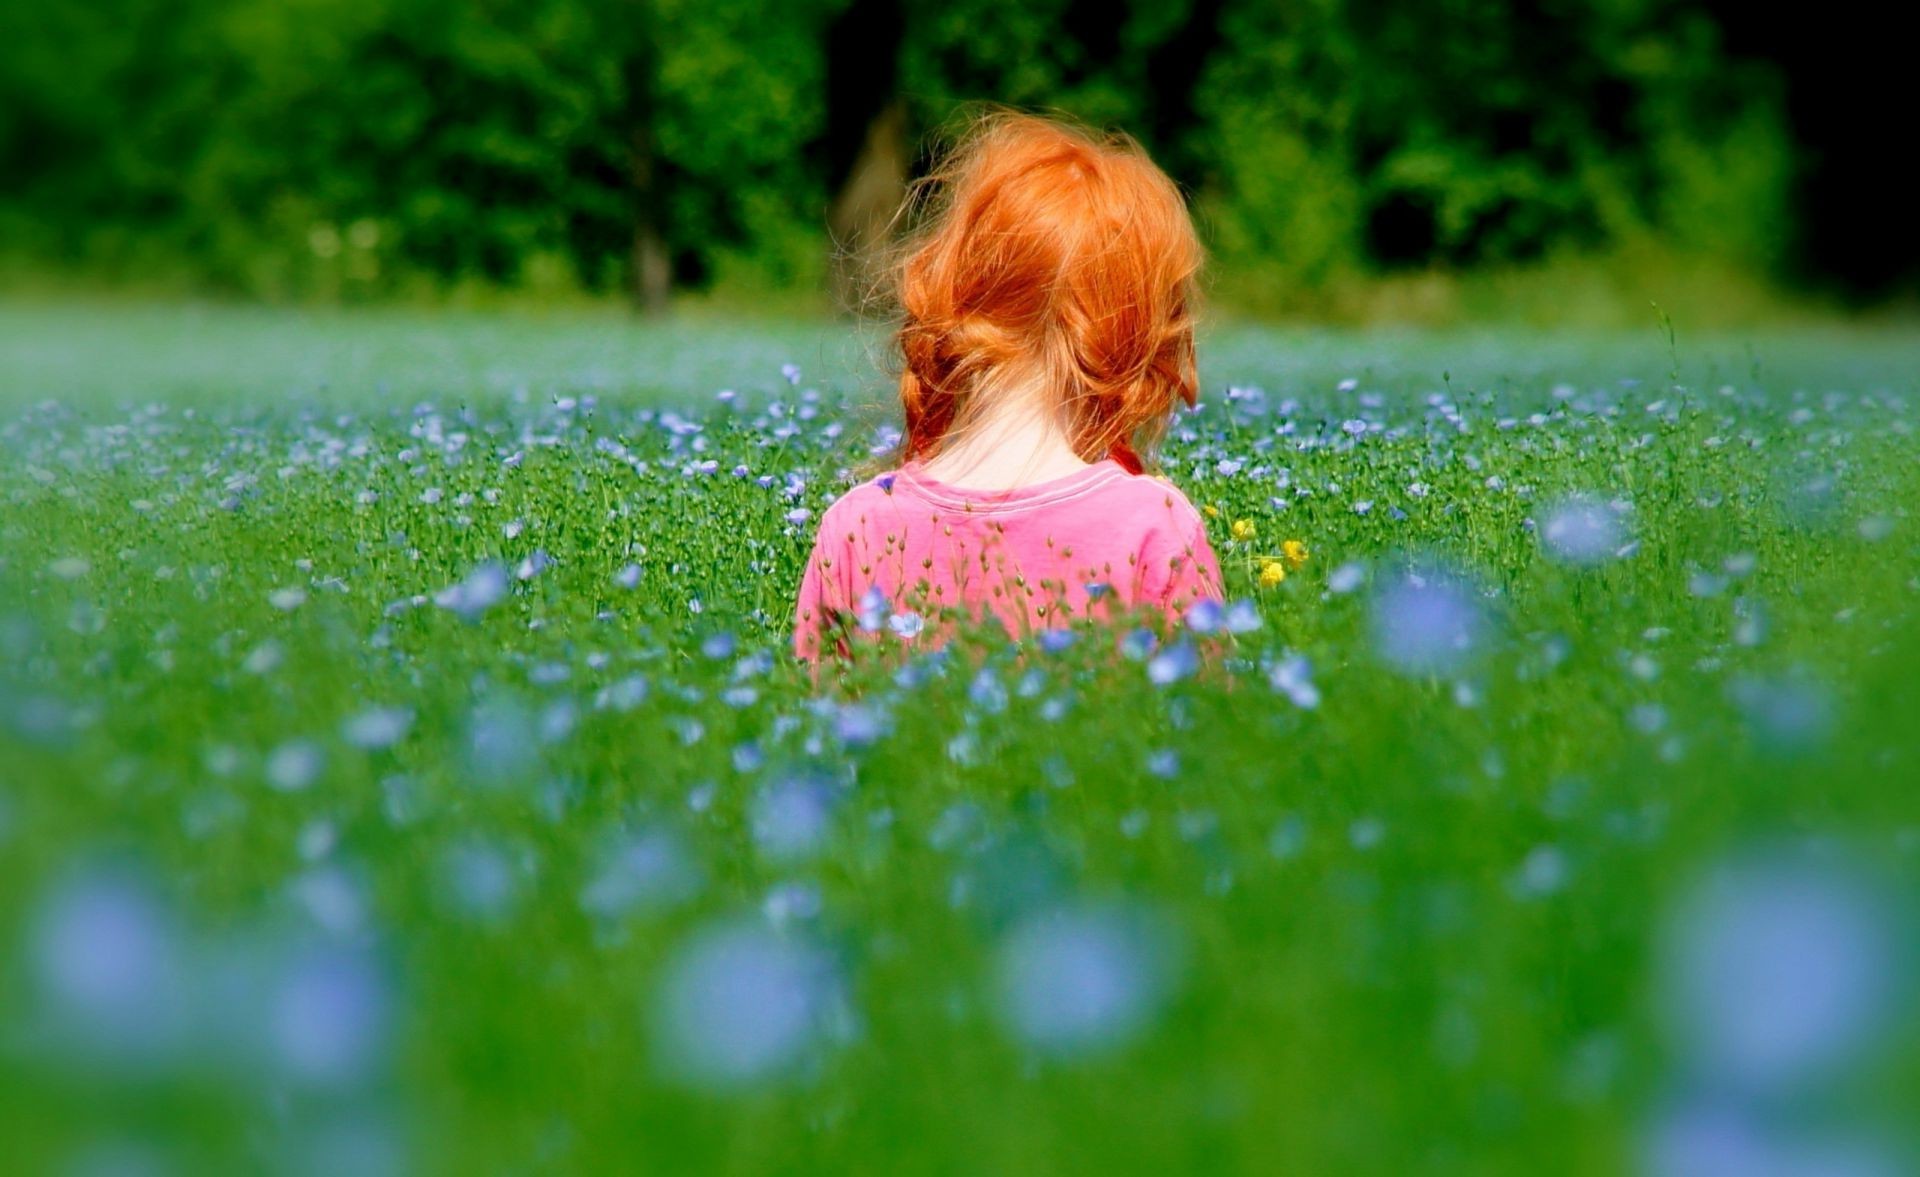 children in nature grass nature summer hayfield outdoors flower little child park